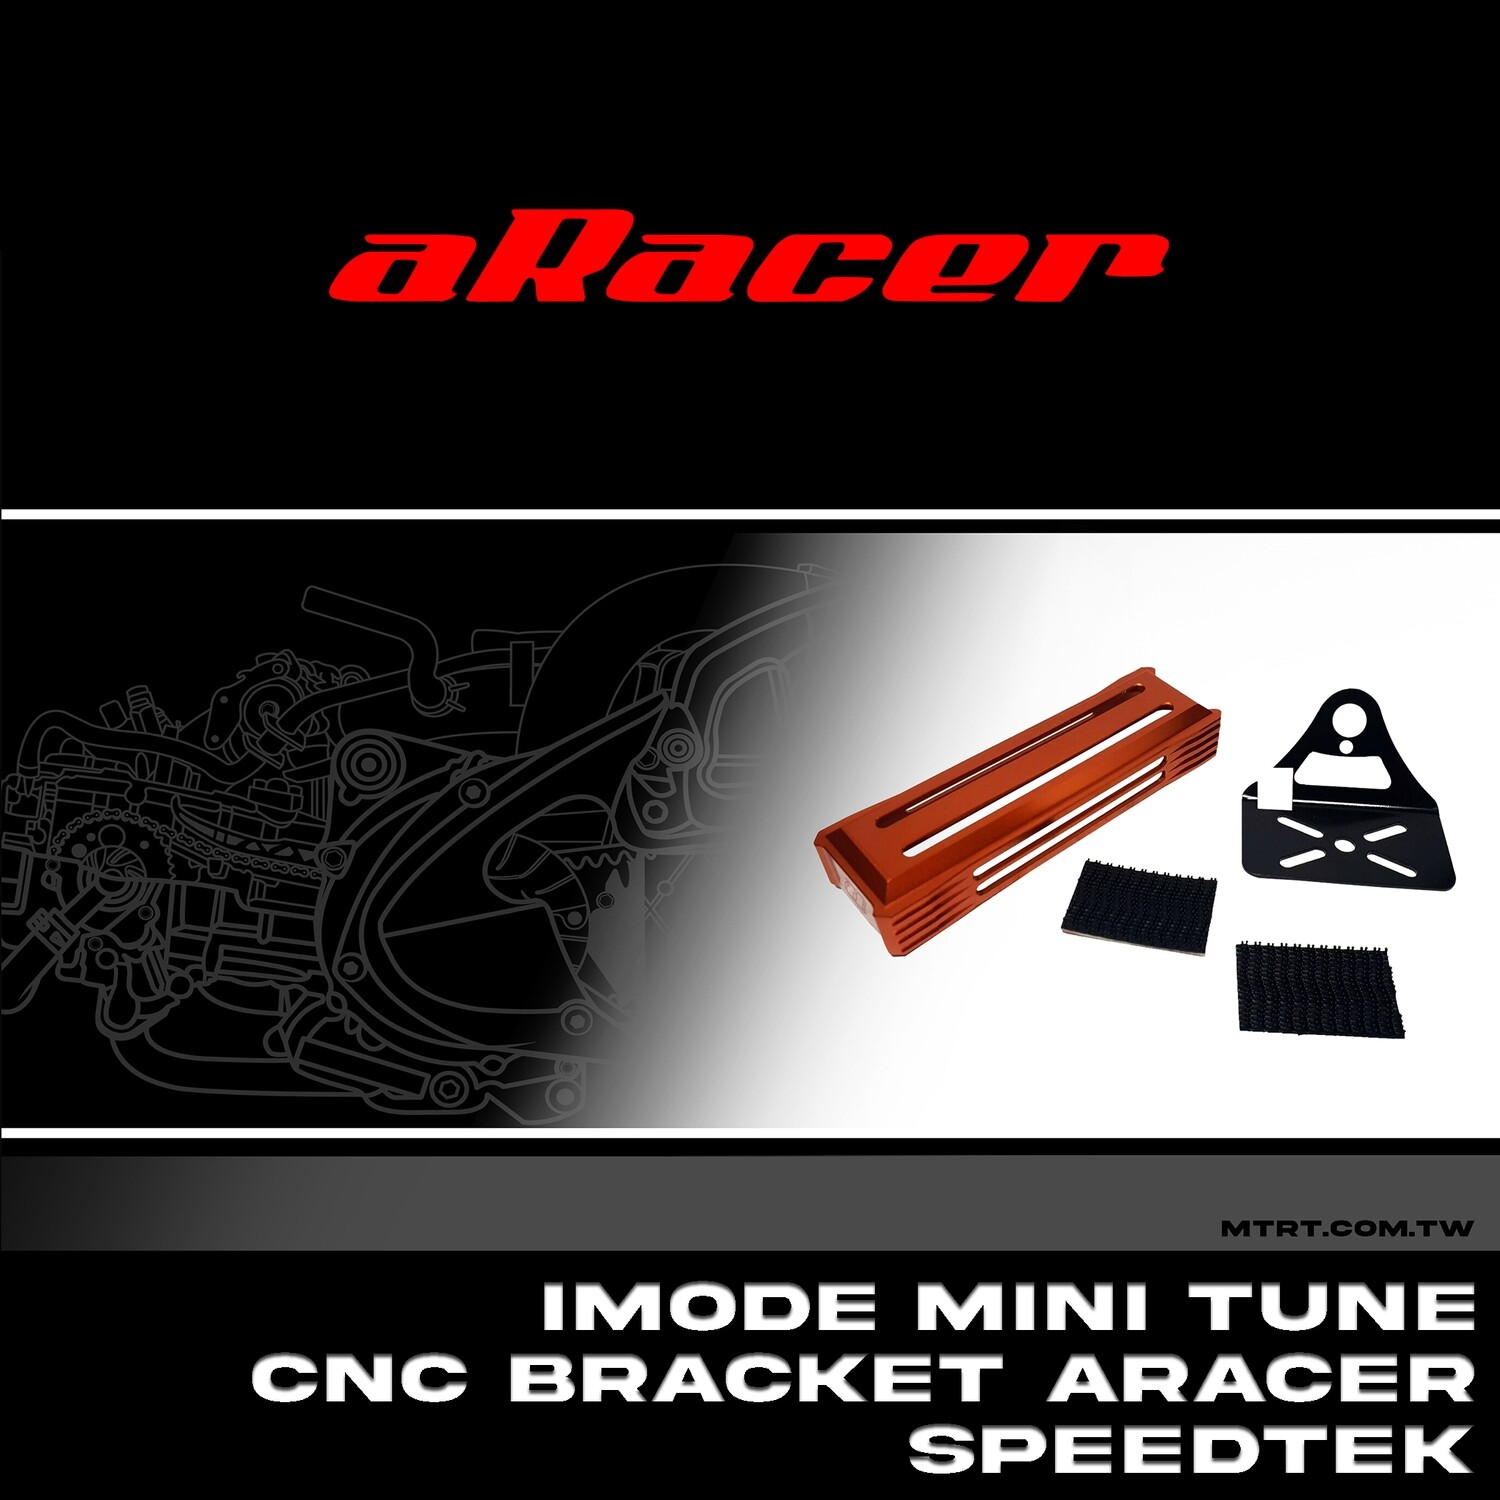 IMODE MINI TUNE CNC BRACKET ARACER SPEEDTEK